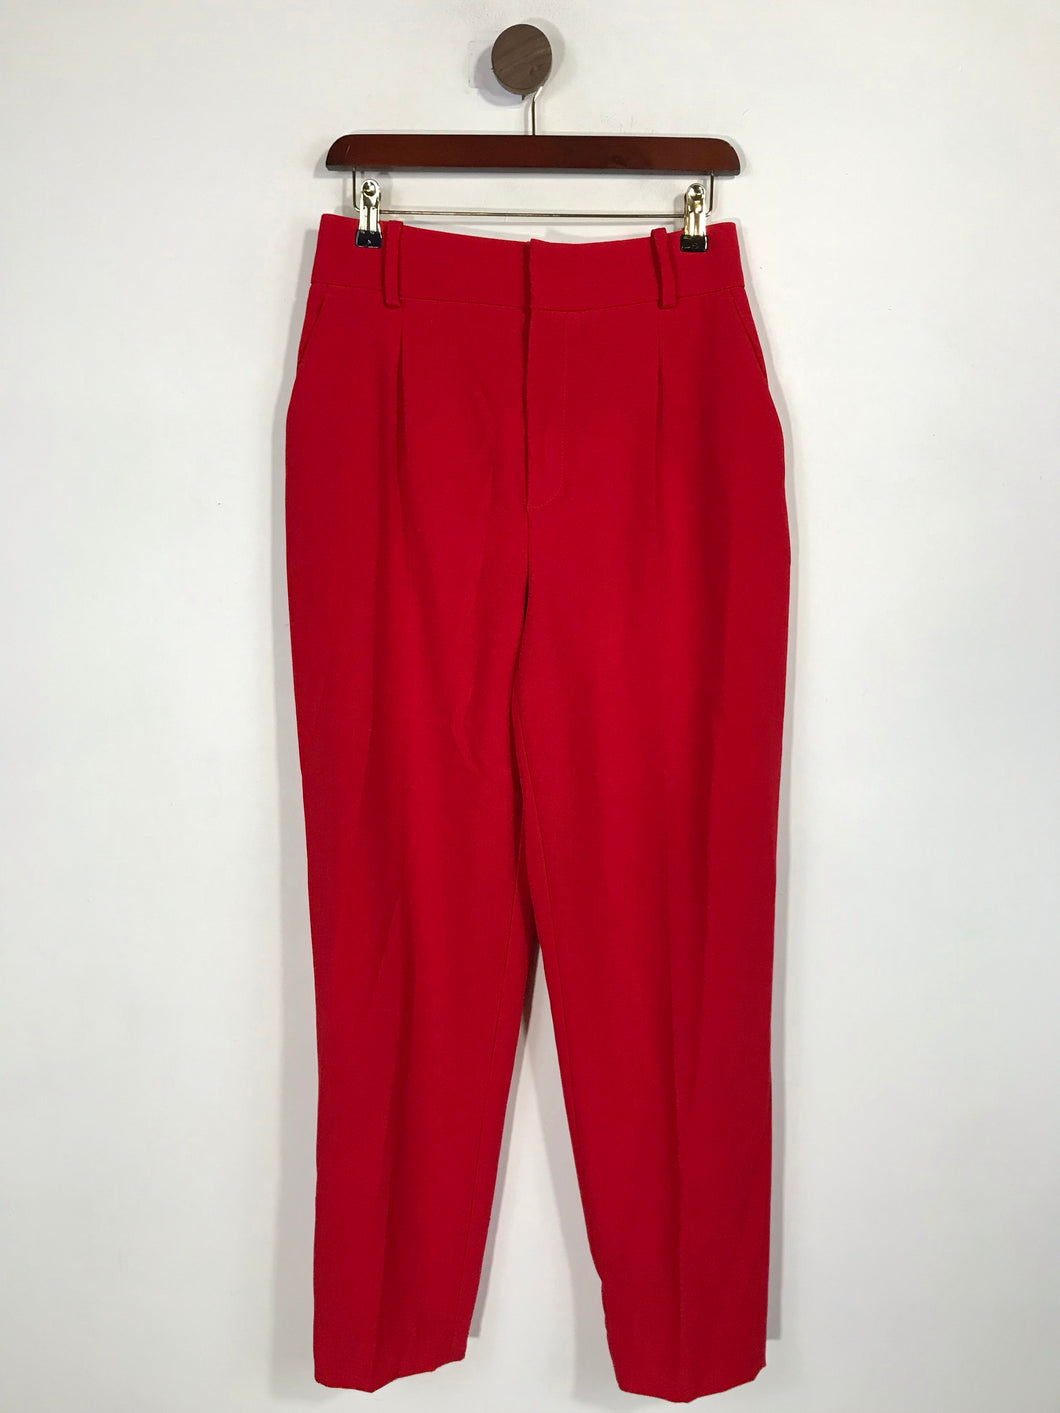 Zara Women's High Waist Casual Trousers | M UK10-12 | Red